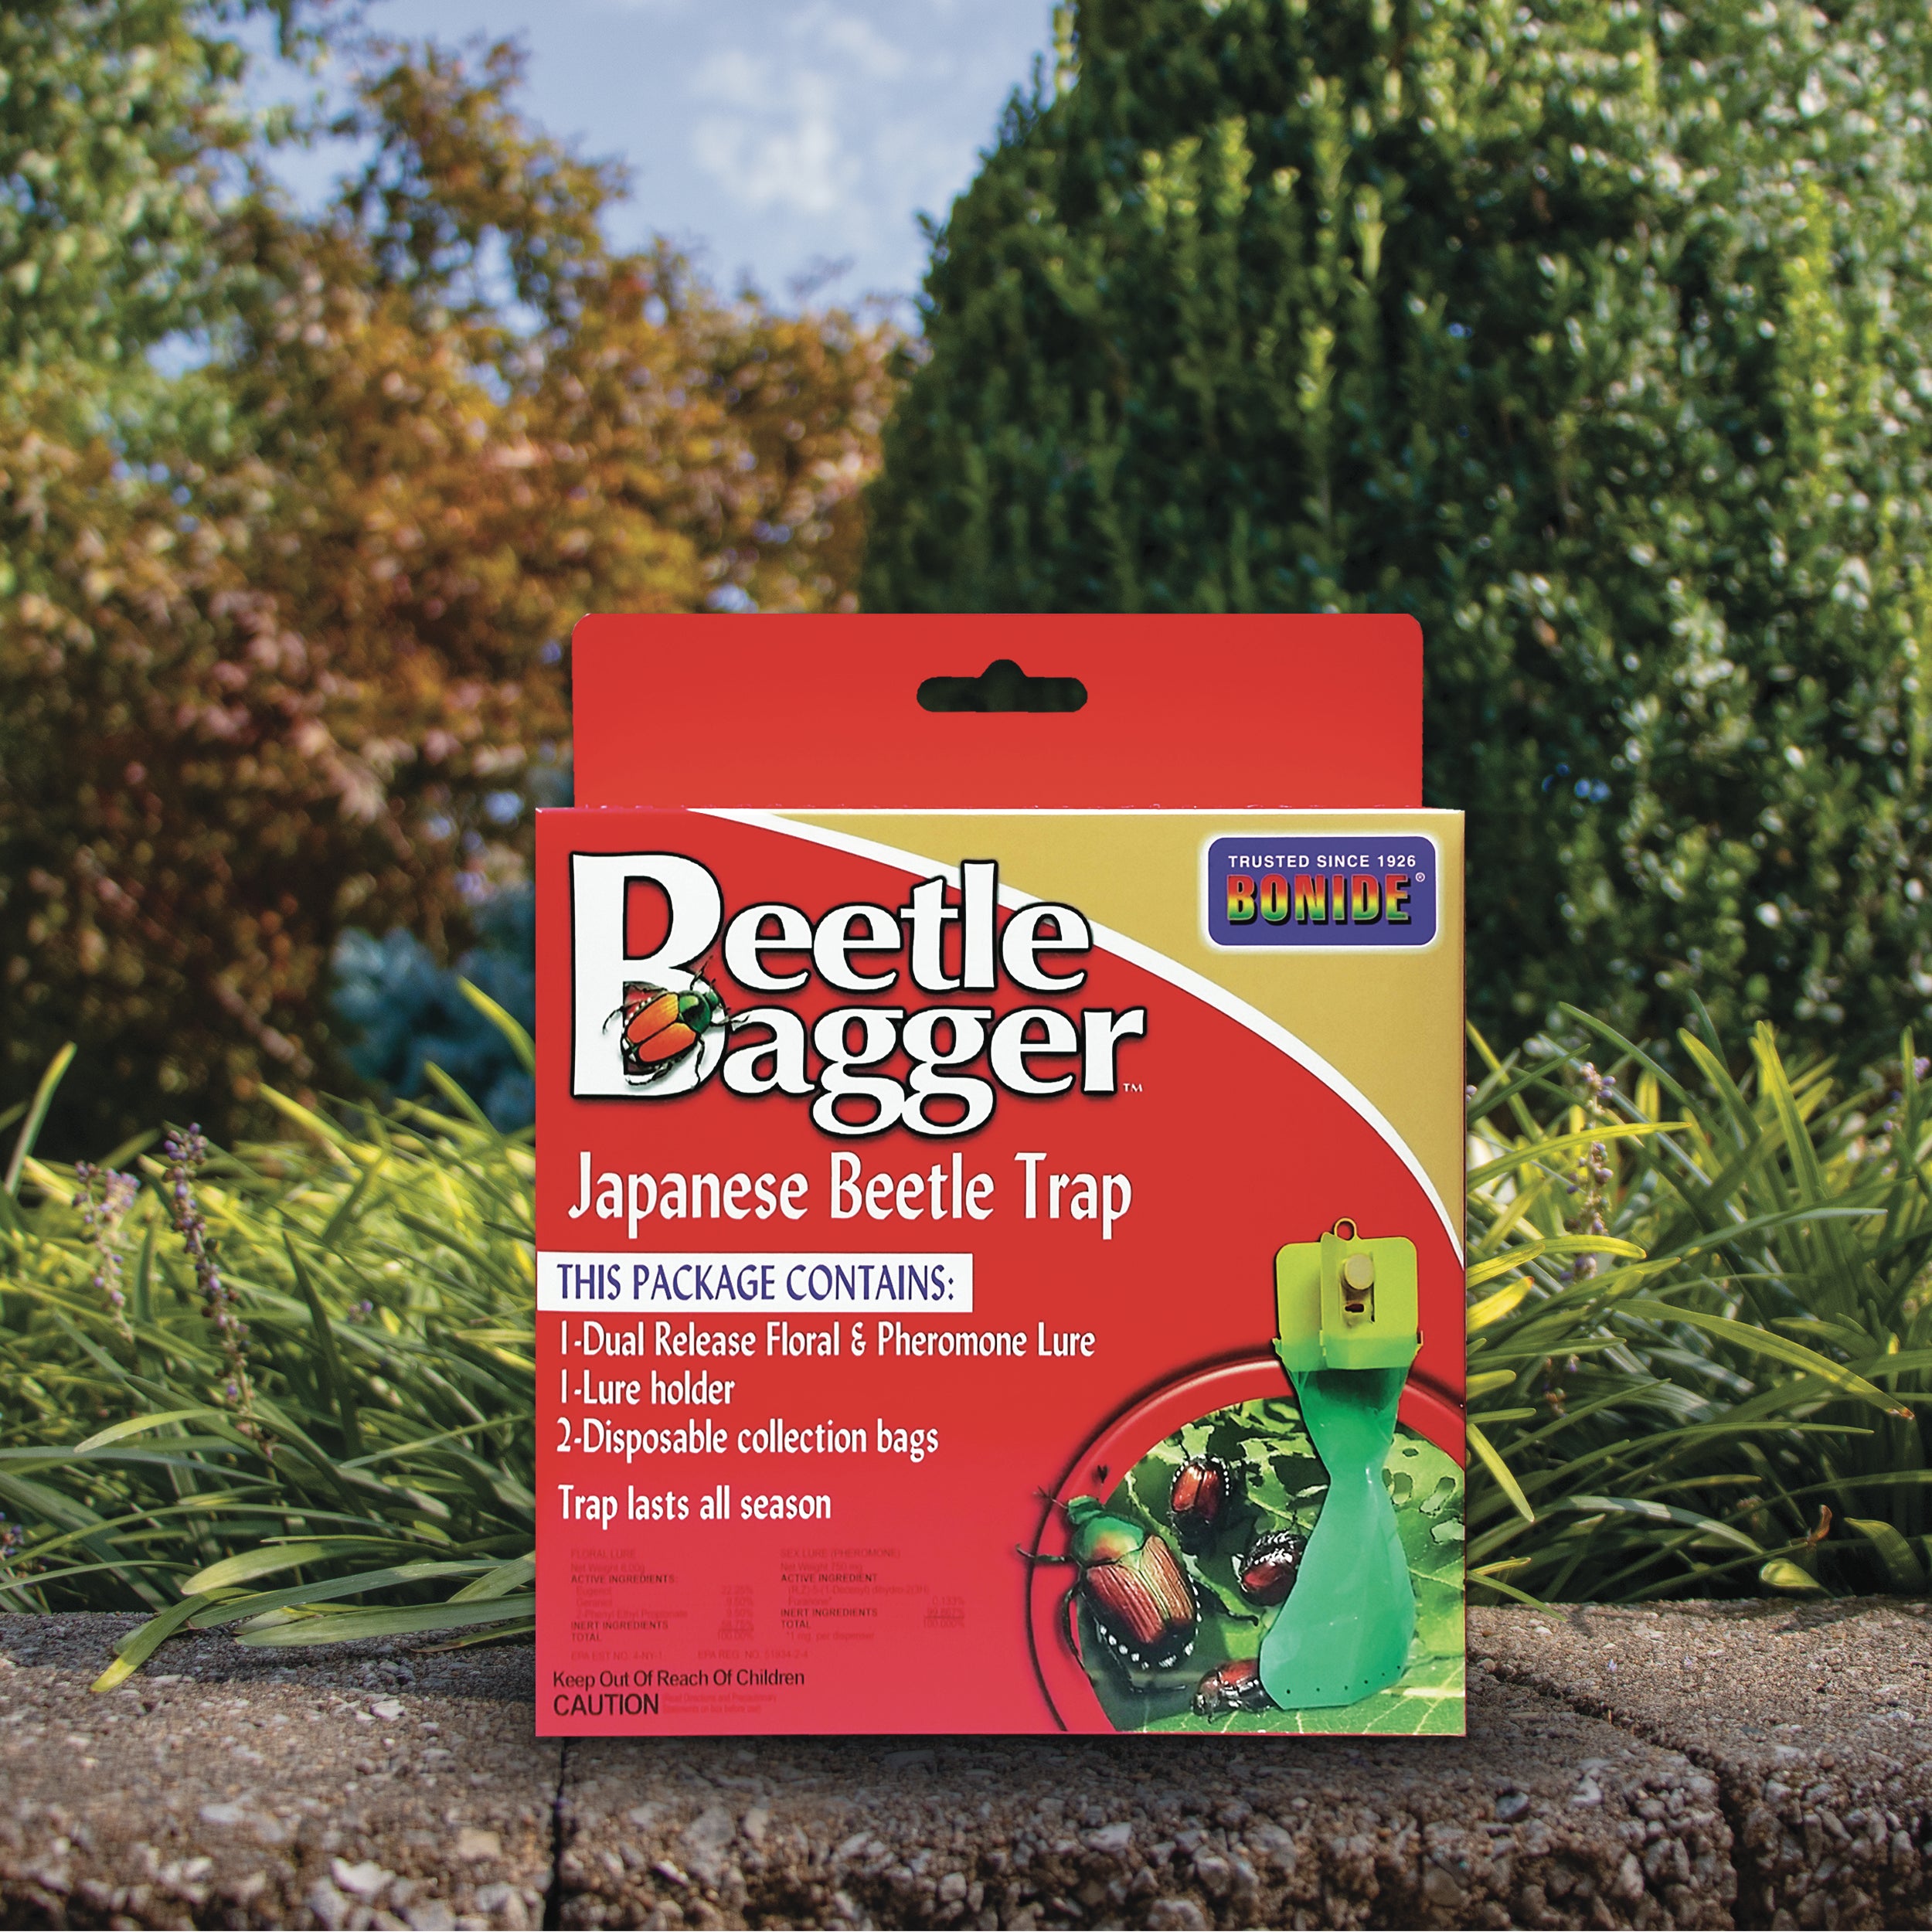 Bonide Japanese Beetle Trap